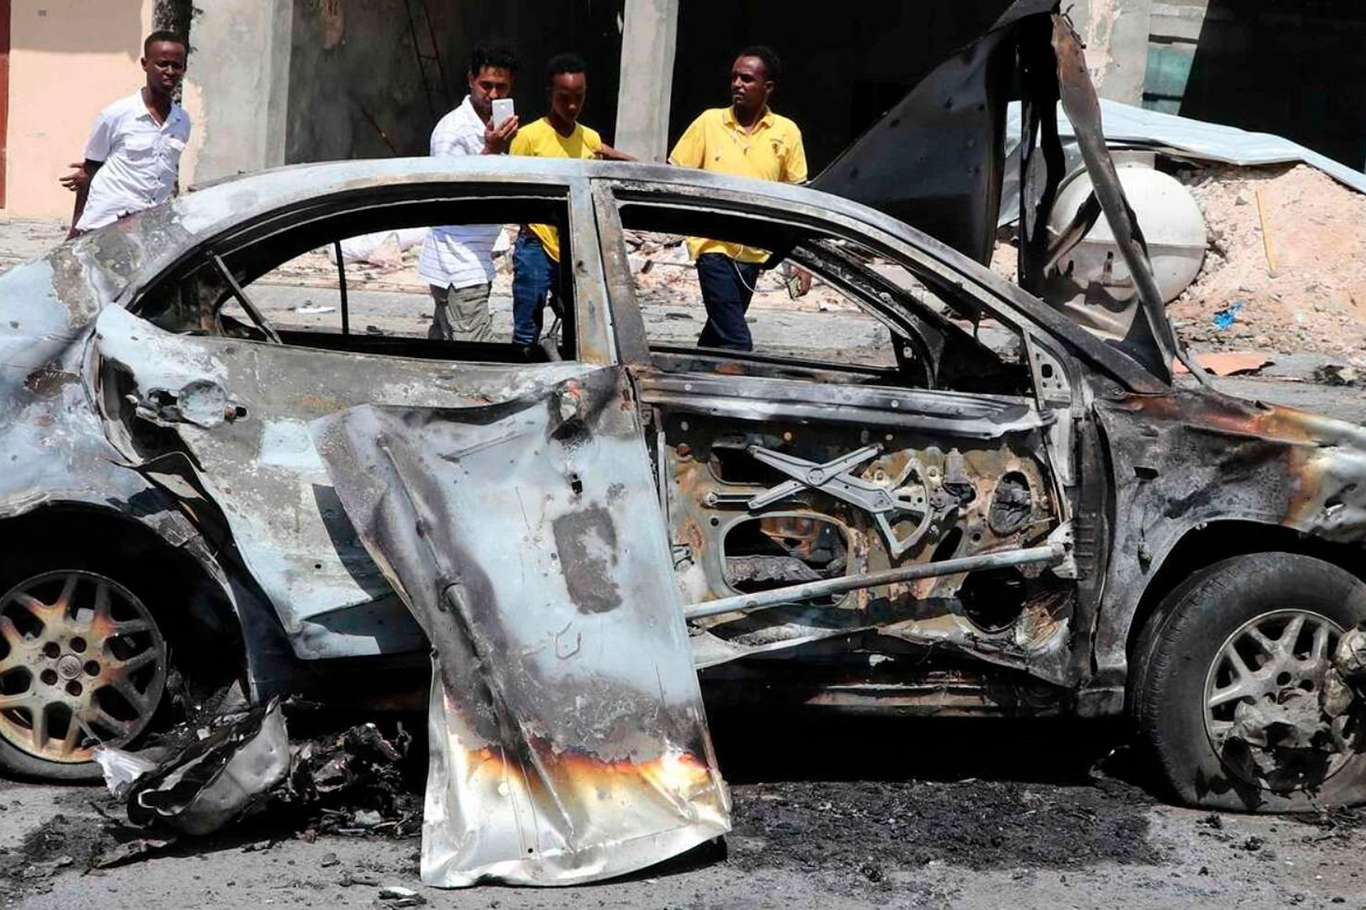 Car bomb attacks kill at least 9 people in central Somalia